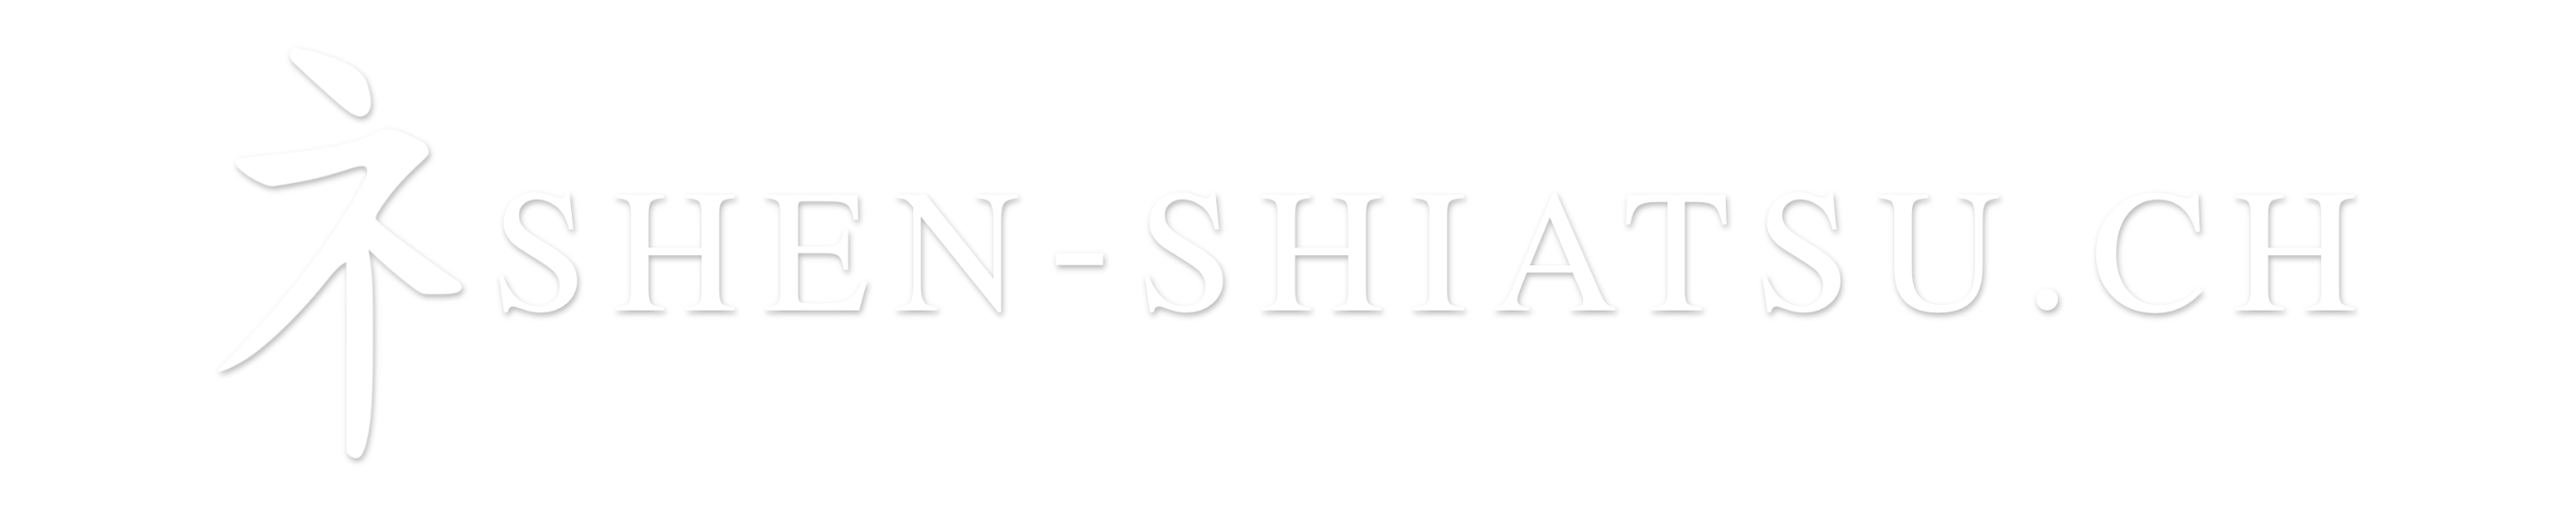 Willkommen bei Shen Shiatsu